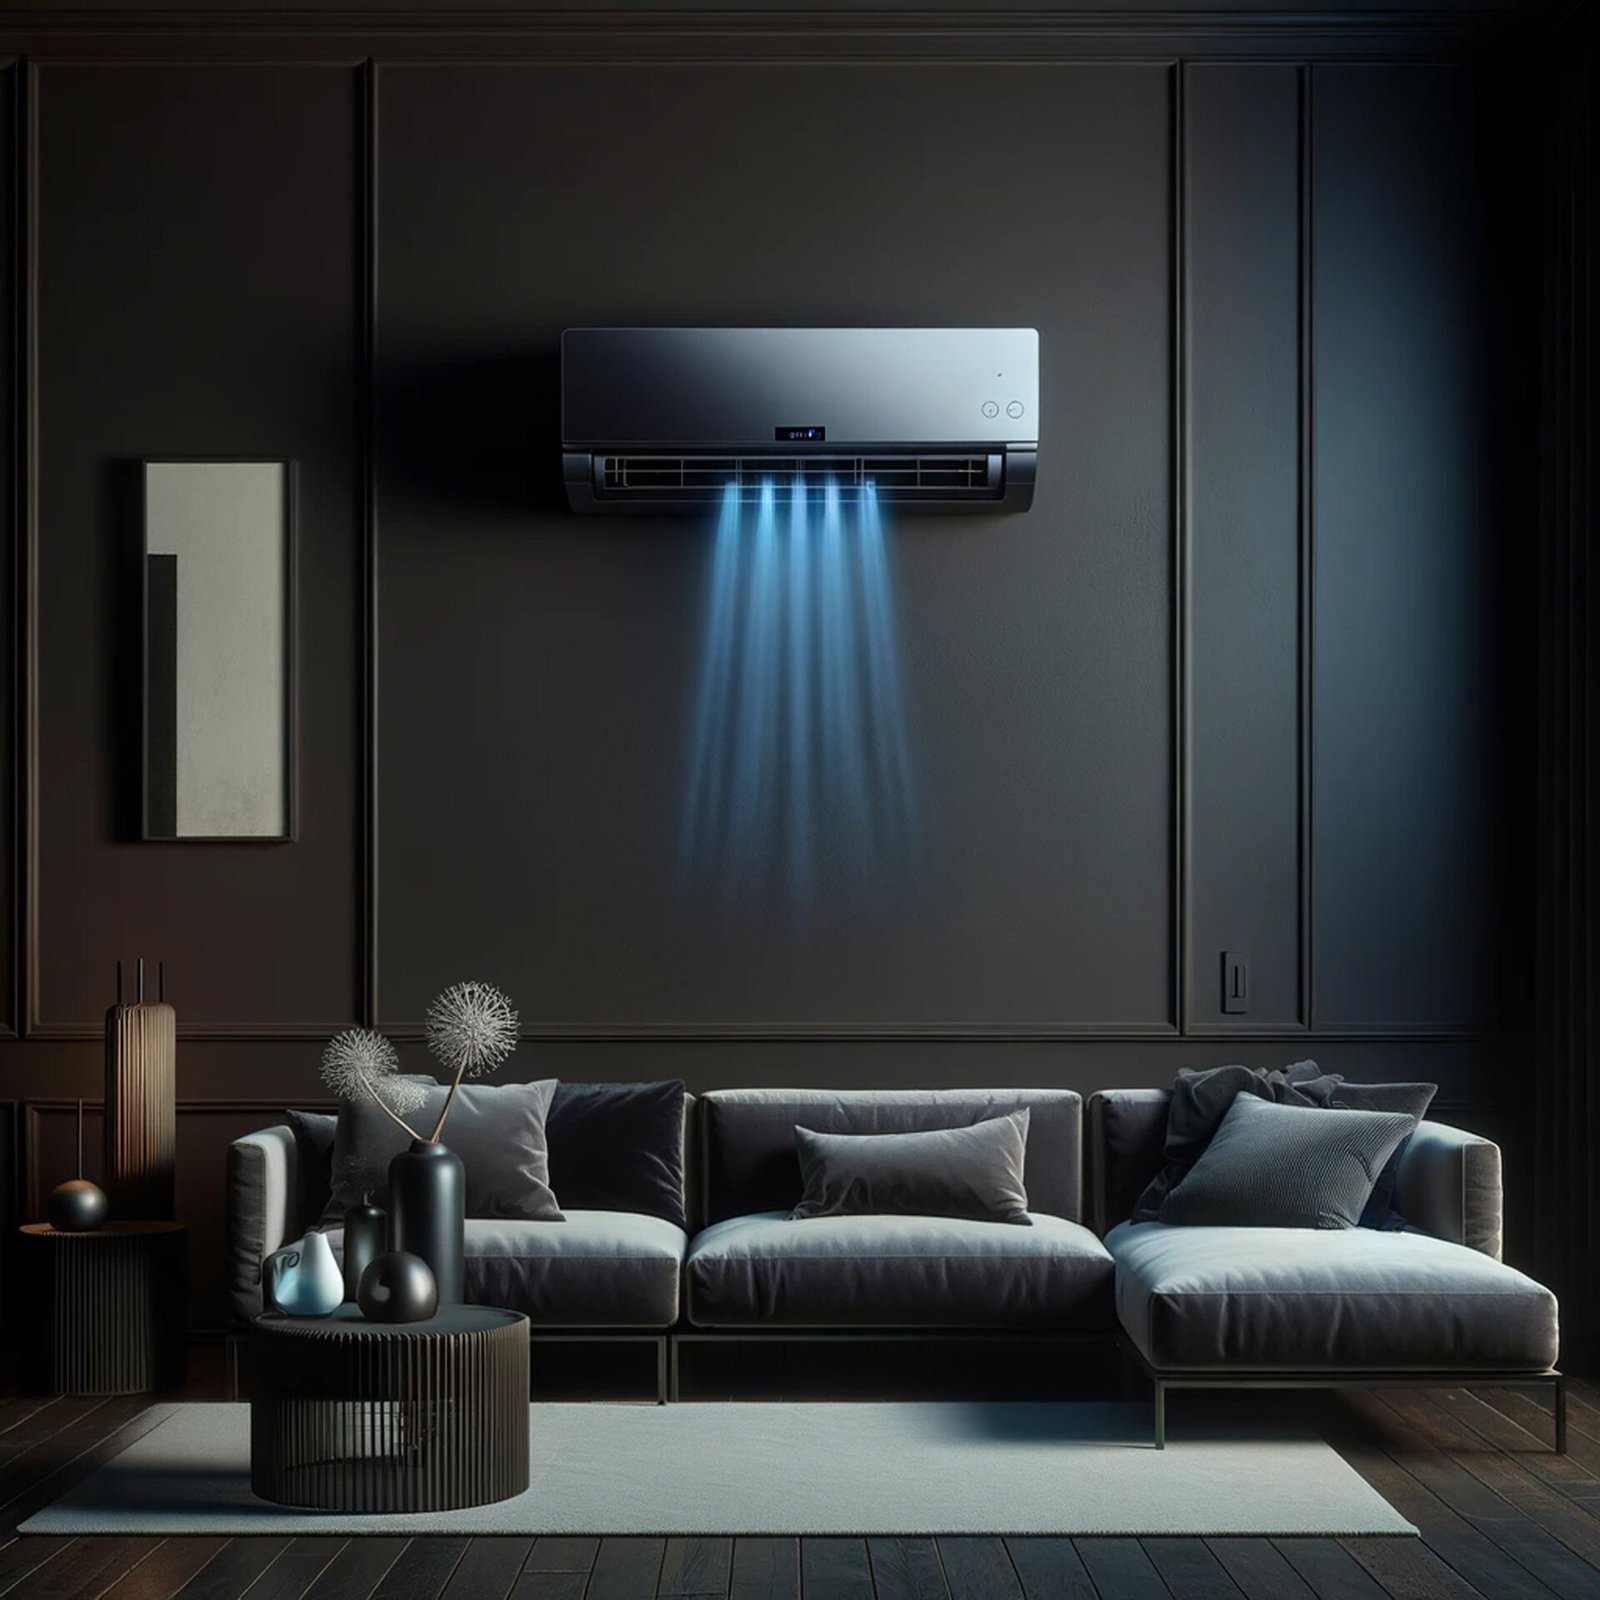 black-sofa-dark-living-room-interior-with-airconditioner